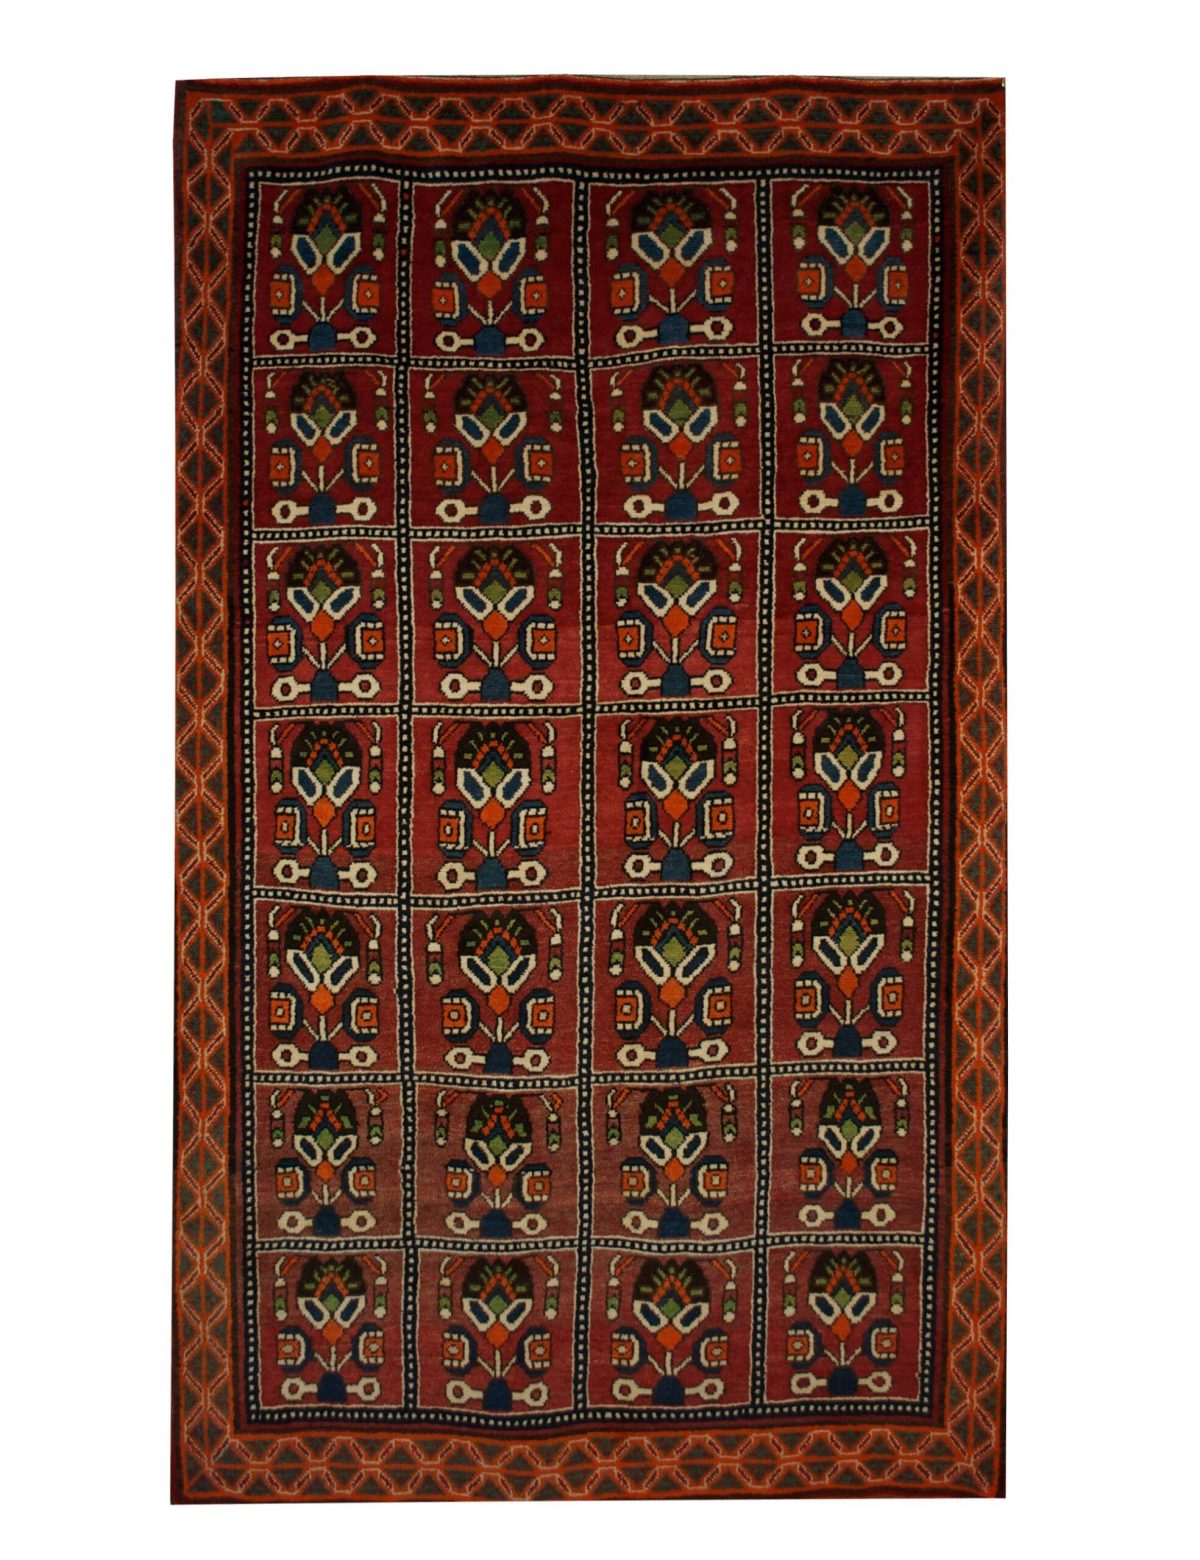 Antique Persian Shiraz 4' 6" x 7' 9" Handmade Area Rug - Shabahang Royal Carpet